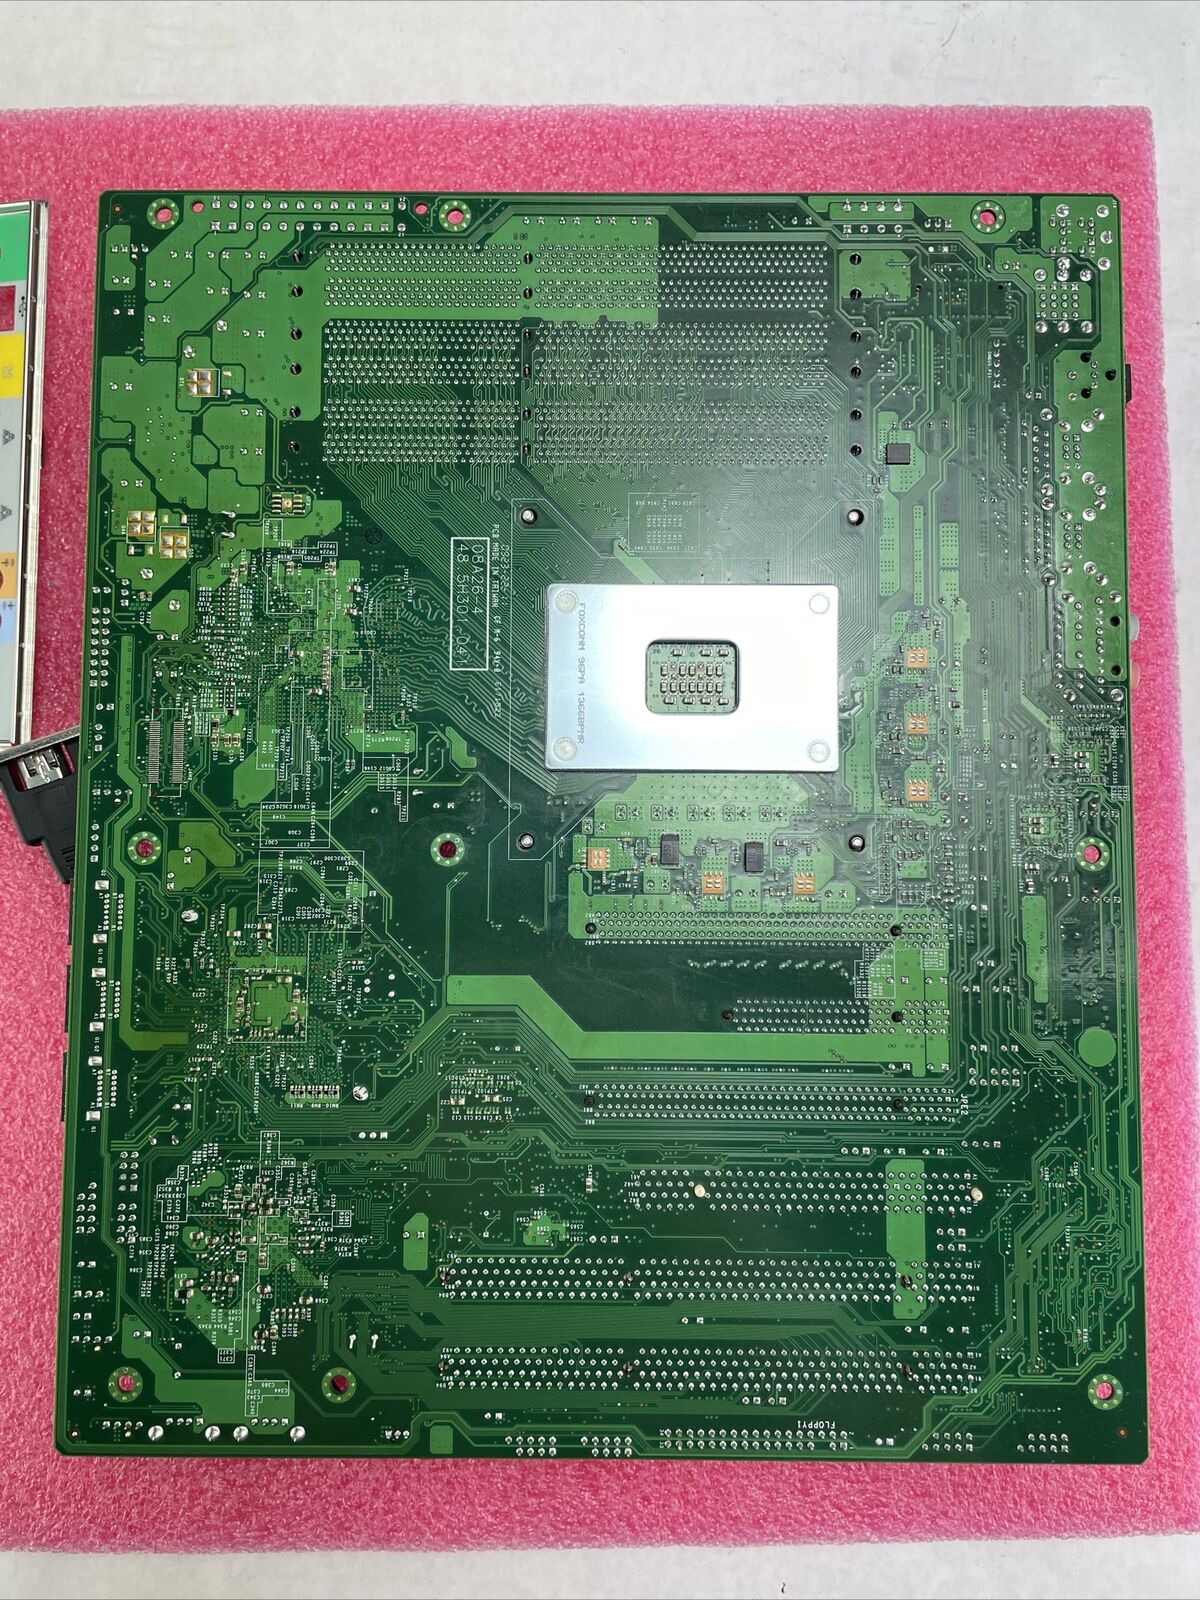 SuperMicro X8SAX Motherboard Intel Xeon E5502 1.87GHz 4GB RAM w/Shield